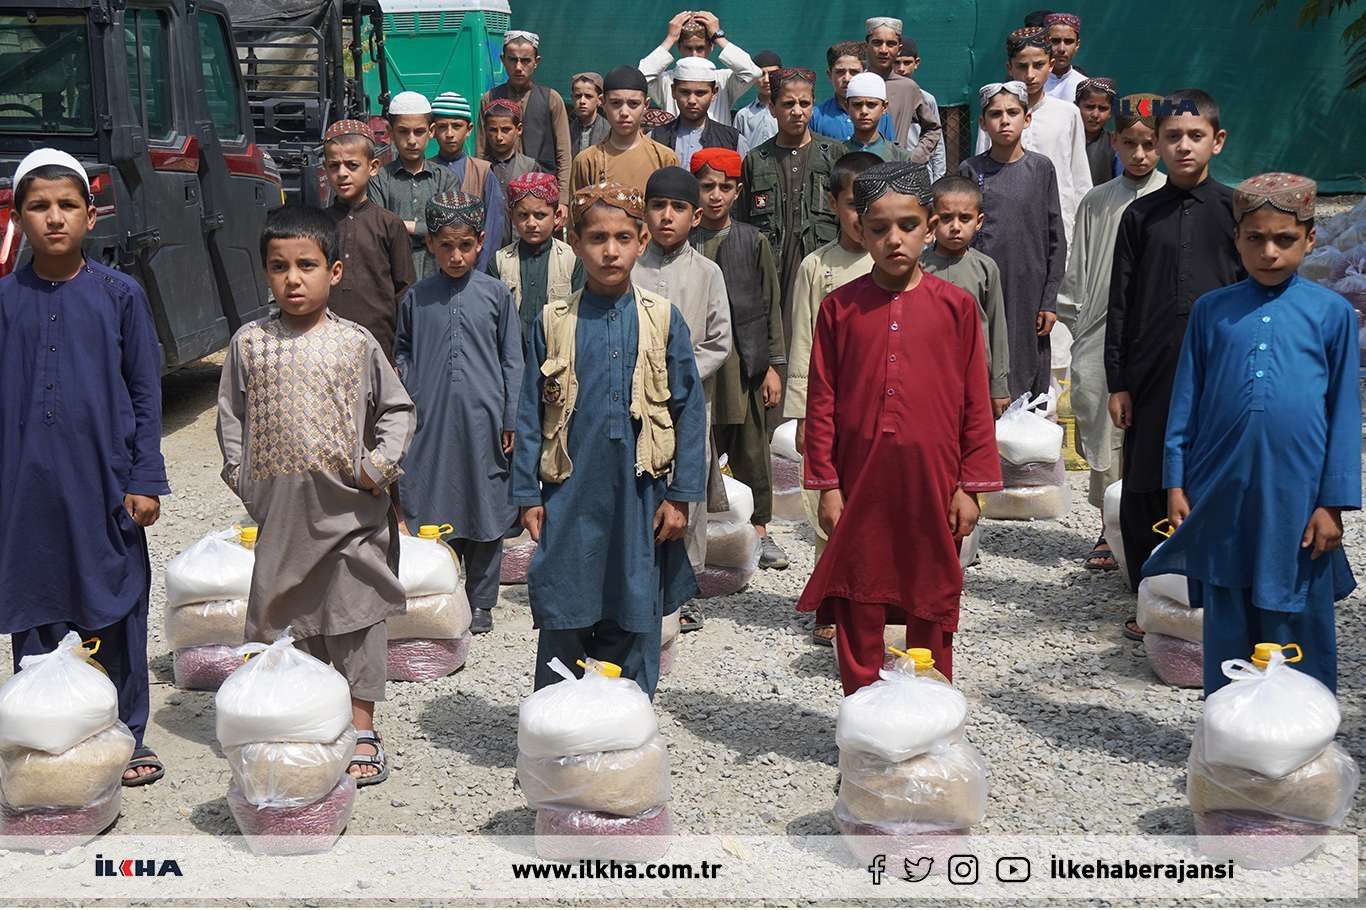 European Orphan Hand distributes humanitarian aid in Afghanistan